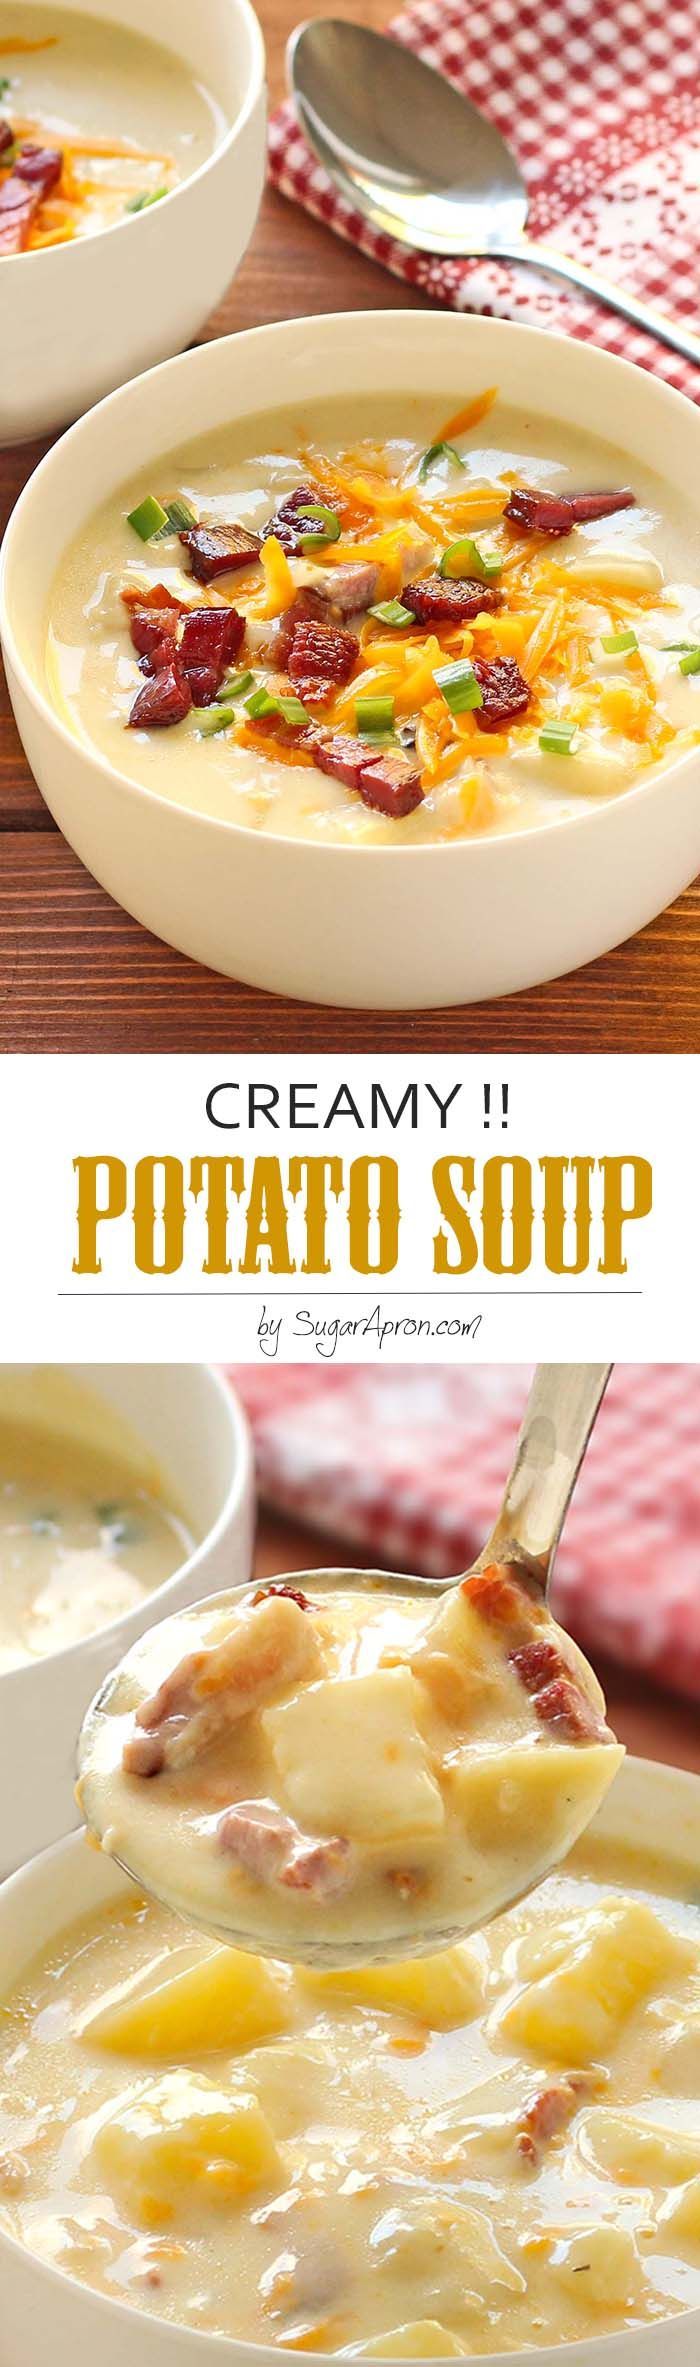 Creamy Potato Soup – The ultimate in comfort foods. Thick, rich, creamy potato soup thats ready i